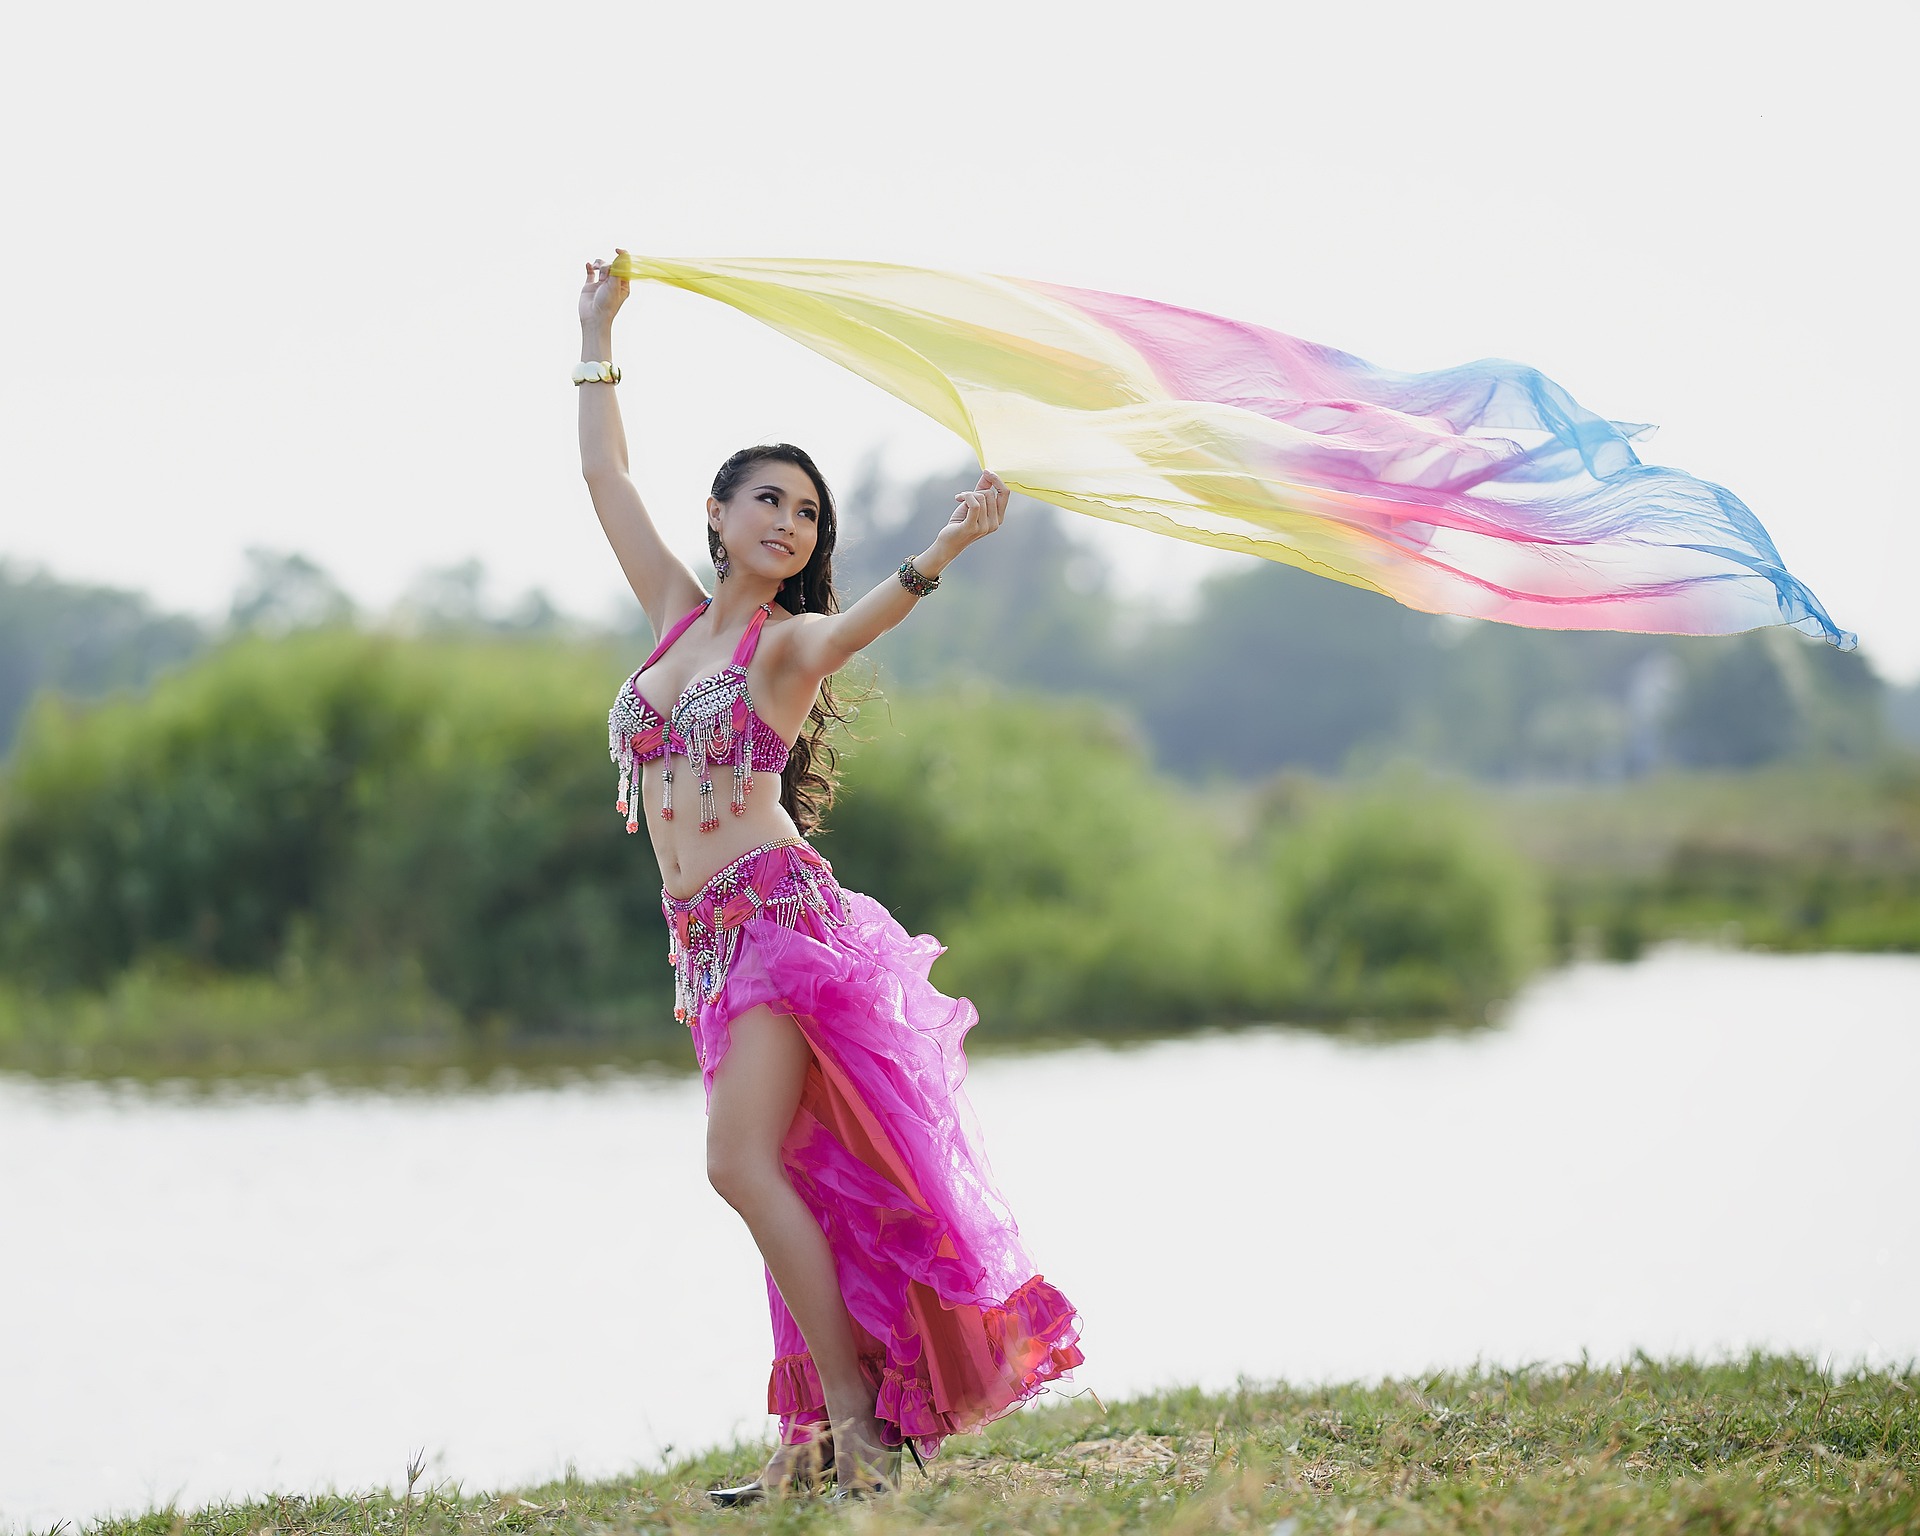 La bailarina de danza oriental posa con velo